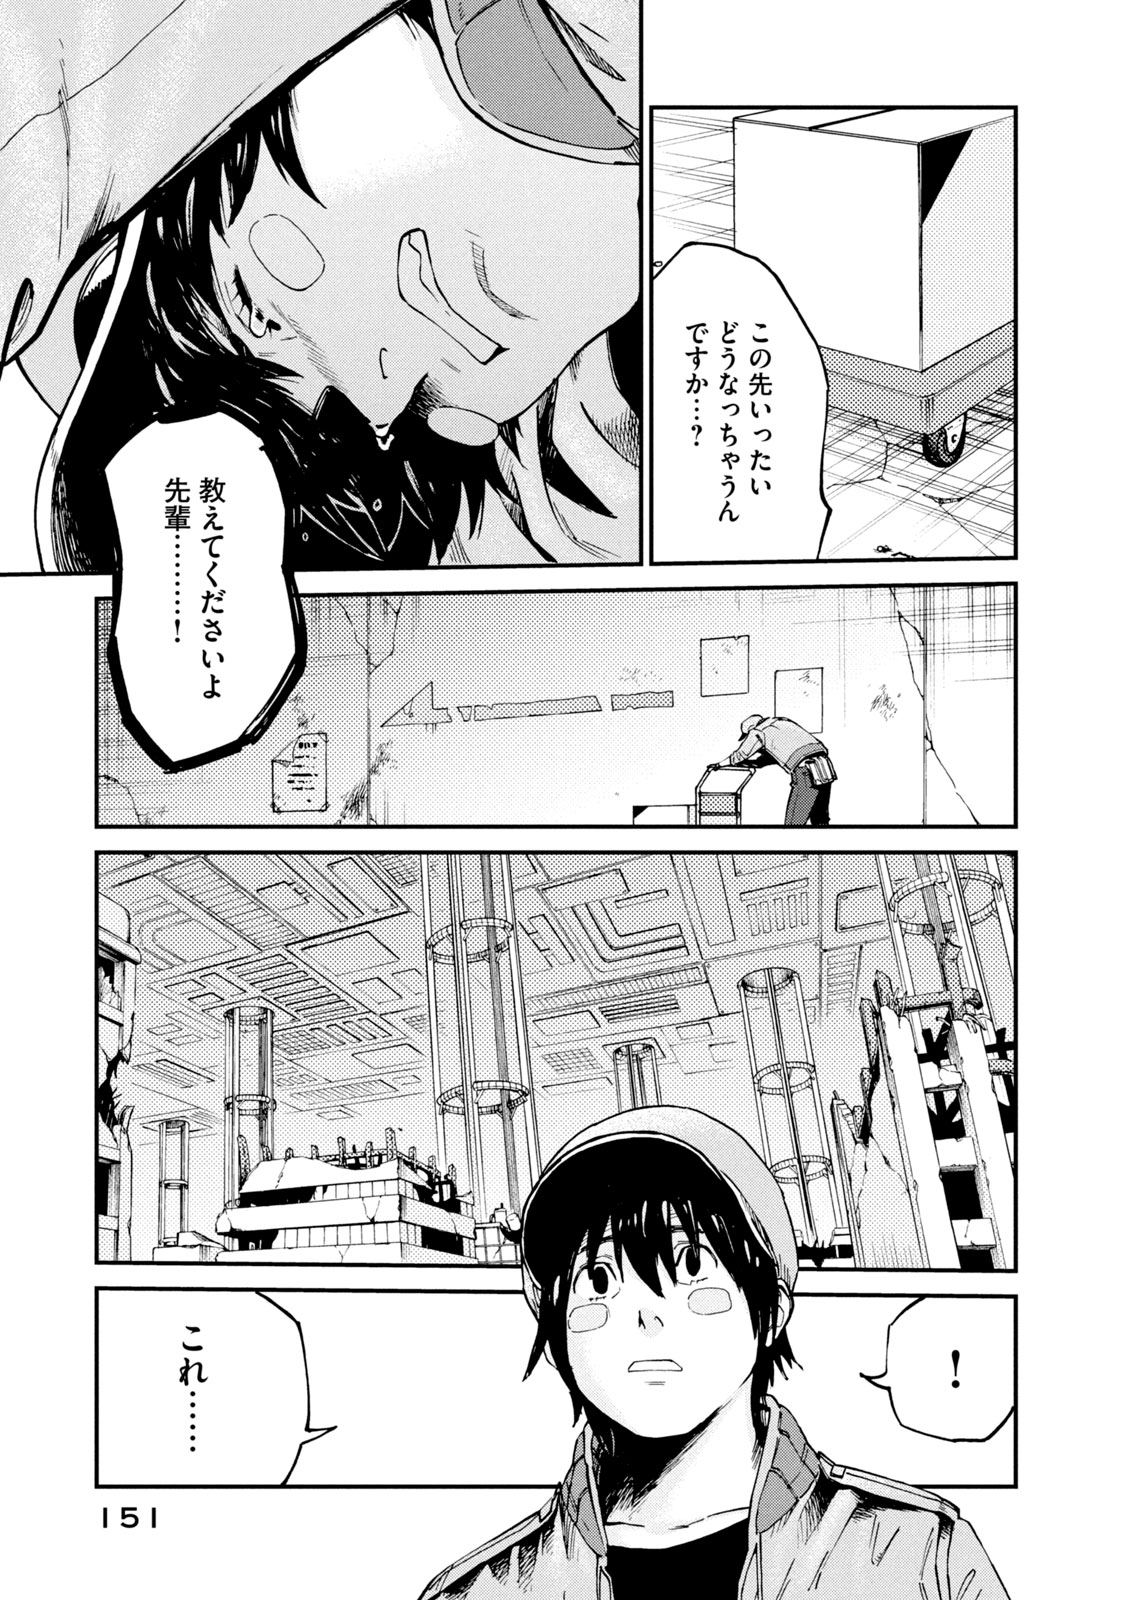 Hataraku Saibou BLACK - Chapter 41 - Page 29